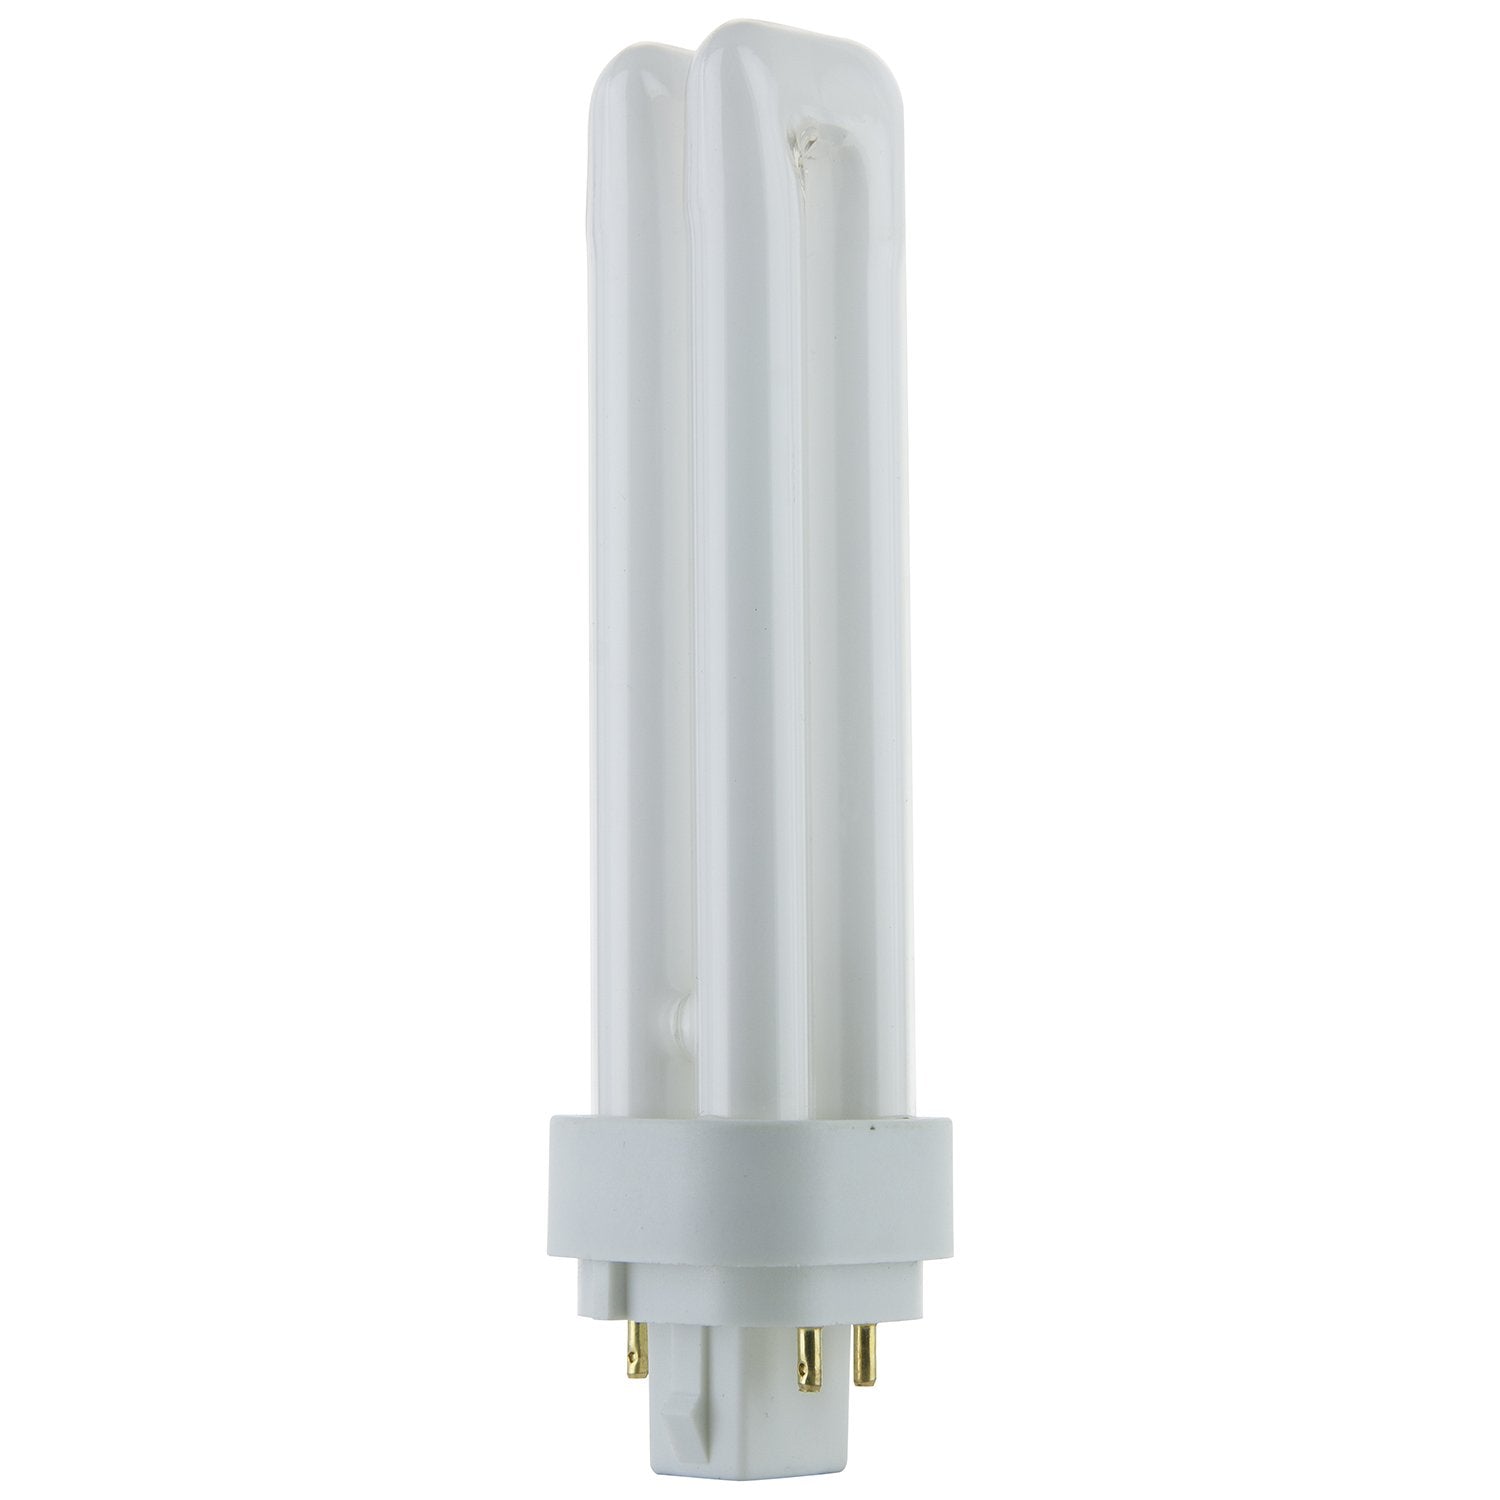 Sunlite PLD18/E/SP41K 18-Watt Compact Fluorescent Plug-in 4-Pin Light Bulb, 4100K Color  - Like New